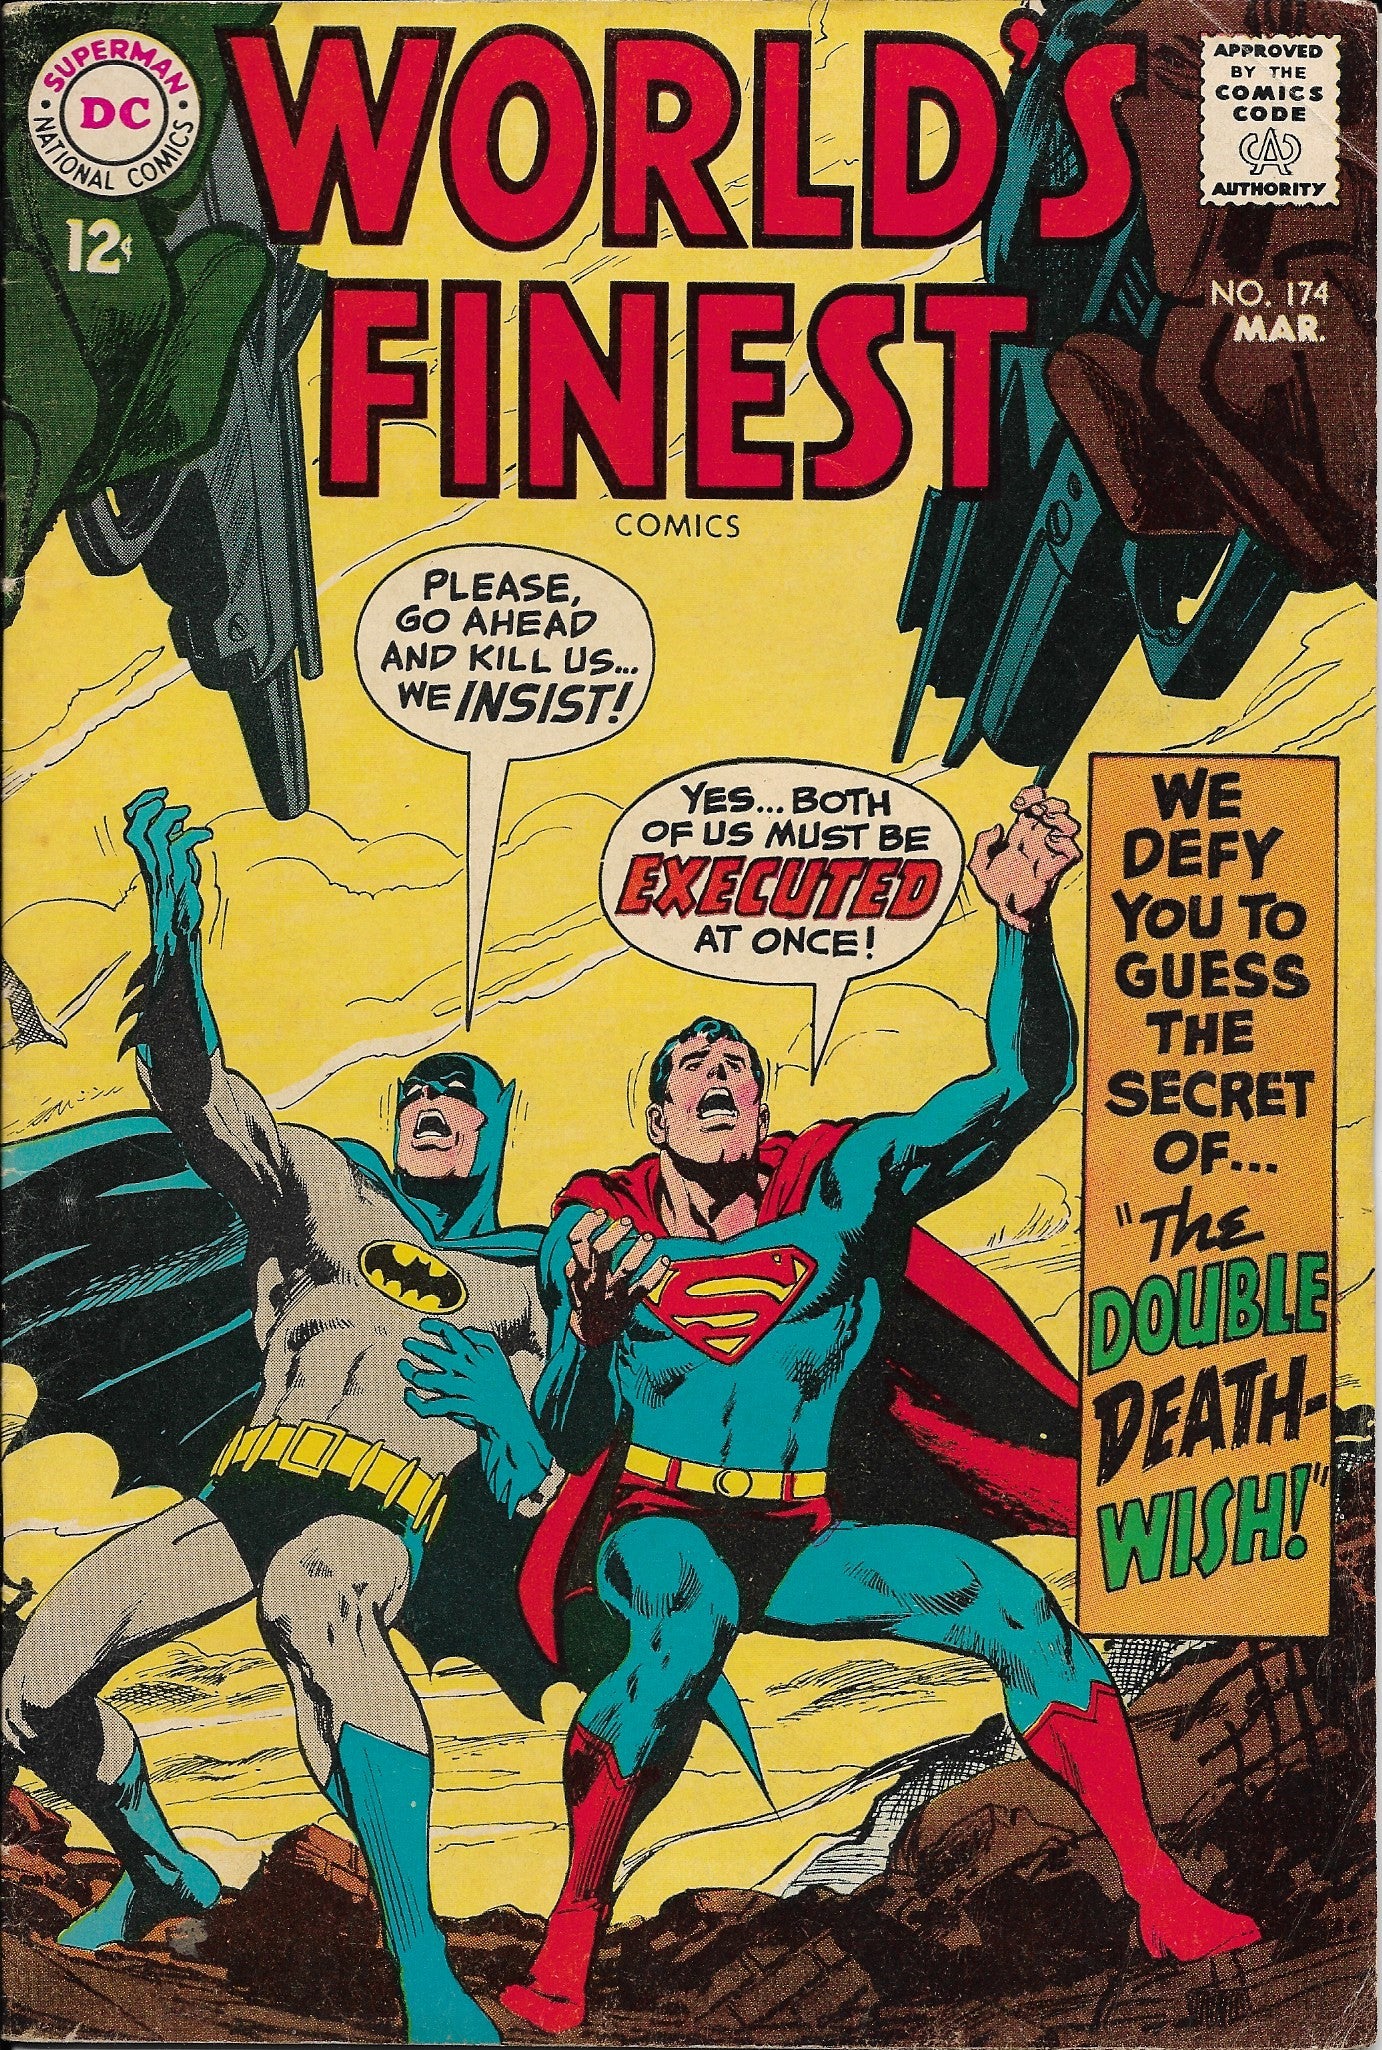 World's Finest No. 174, Featuring Batman & Superman, DC Comics, March 1968